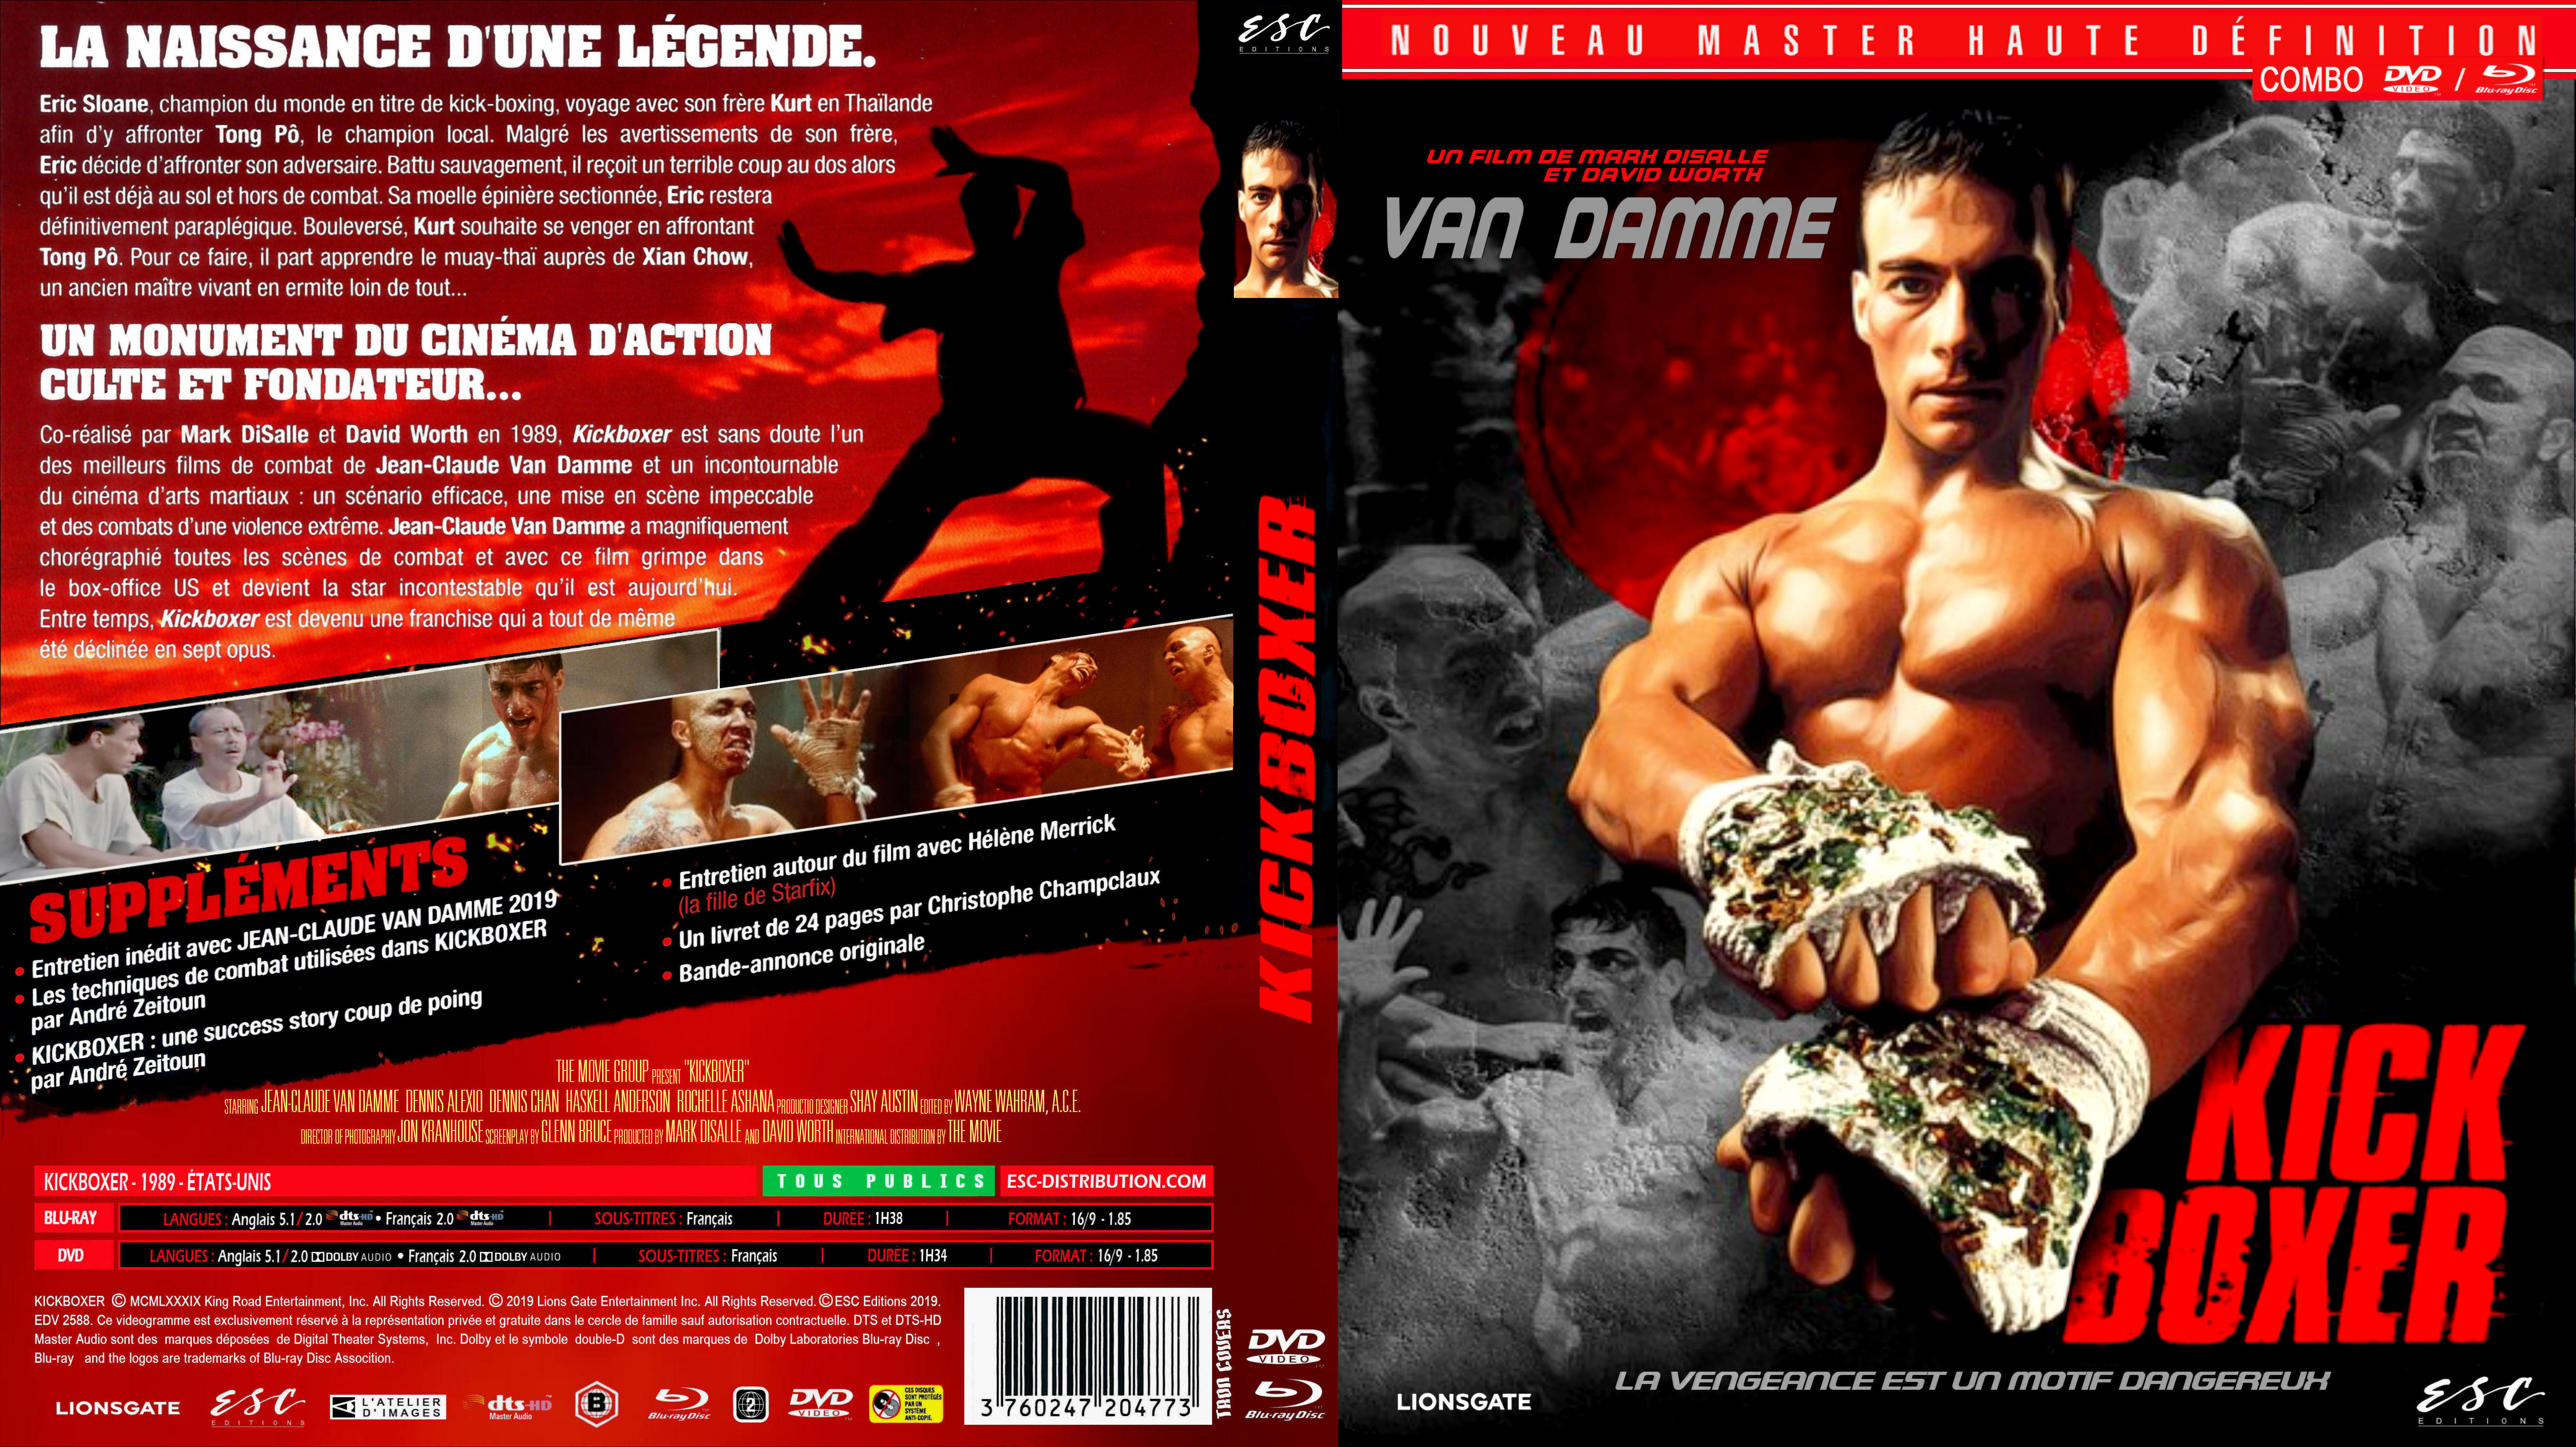 Jaquette DVD Kickboxer custom (BLU-RAY) v2